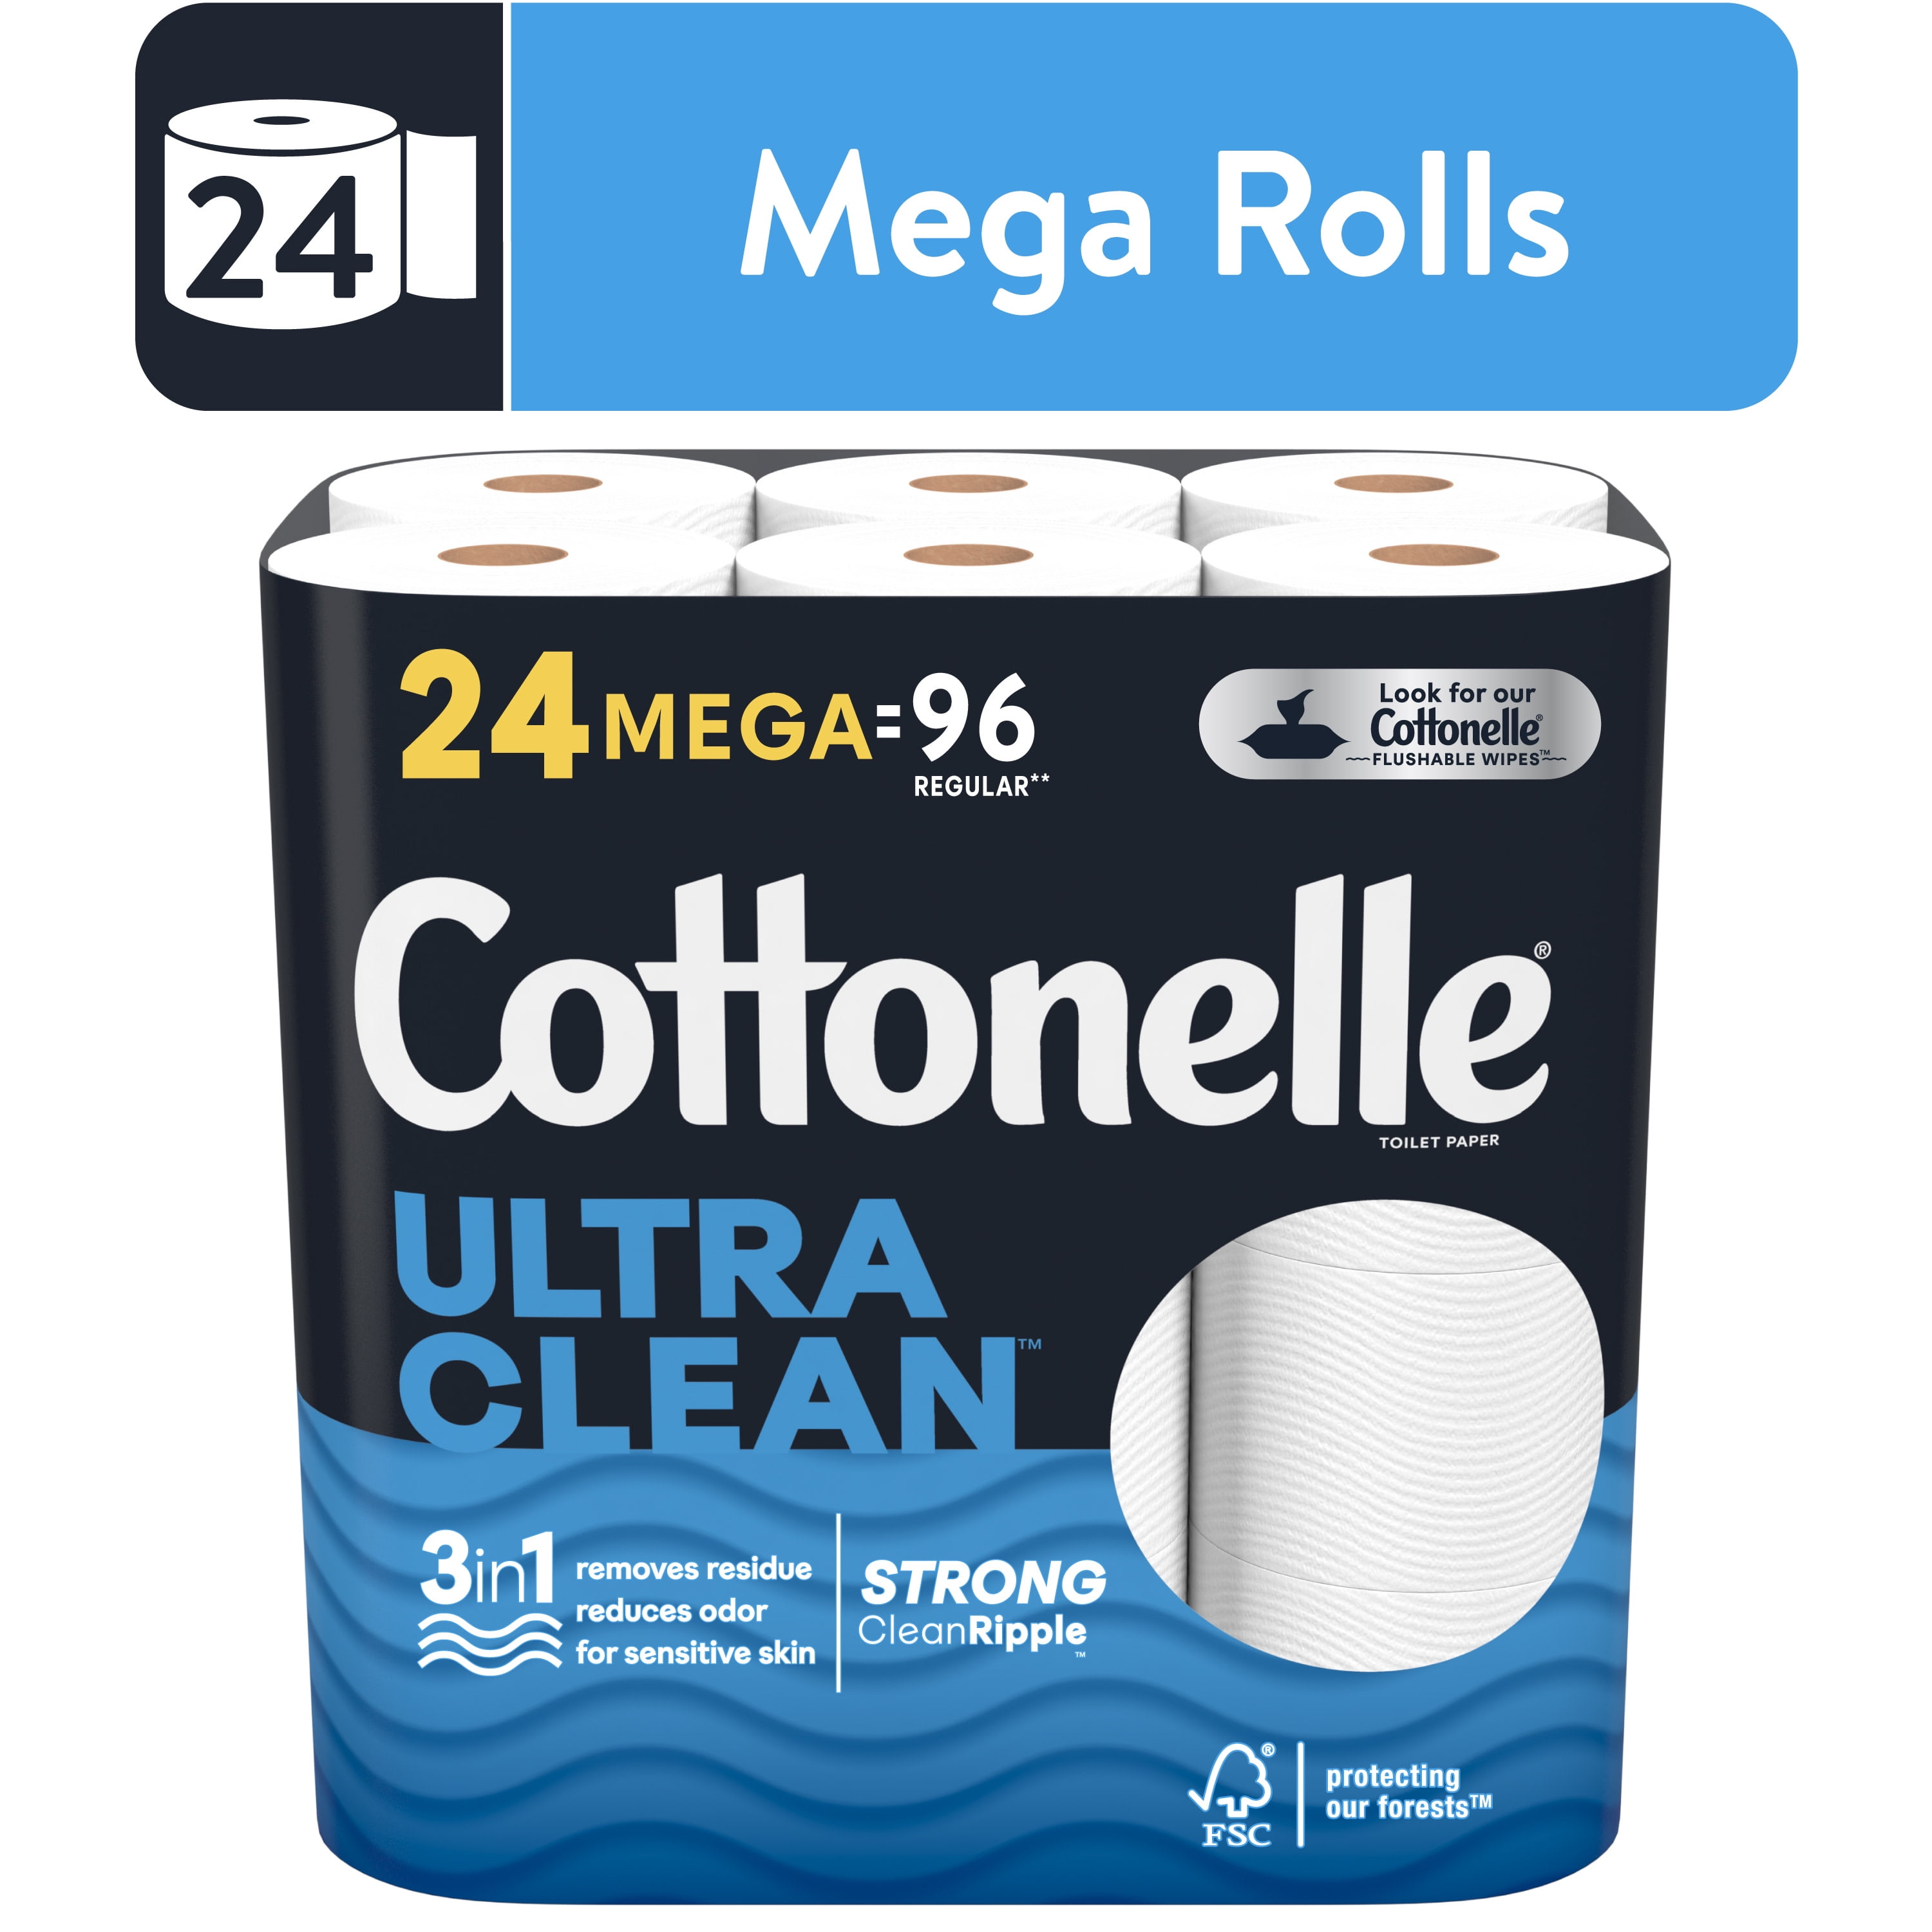 Cottonelle Ultra Clean Toilet Paper, Strong Toilet Tissue, 24 Mega Rolls (24 Mega Rolls = 96 Regular Rolls), 312 Sheets per Roll